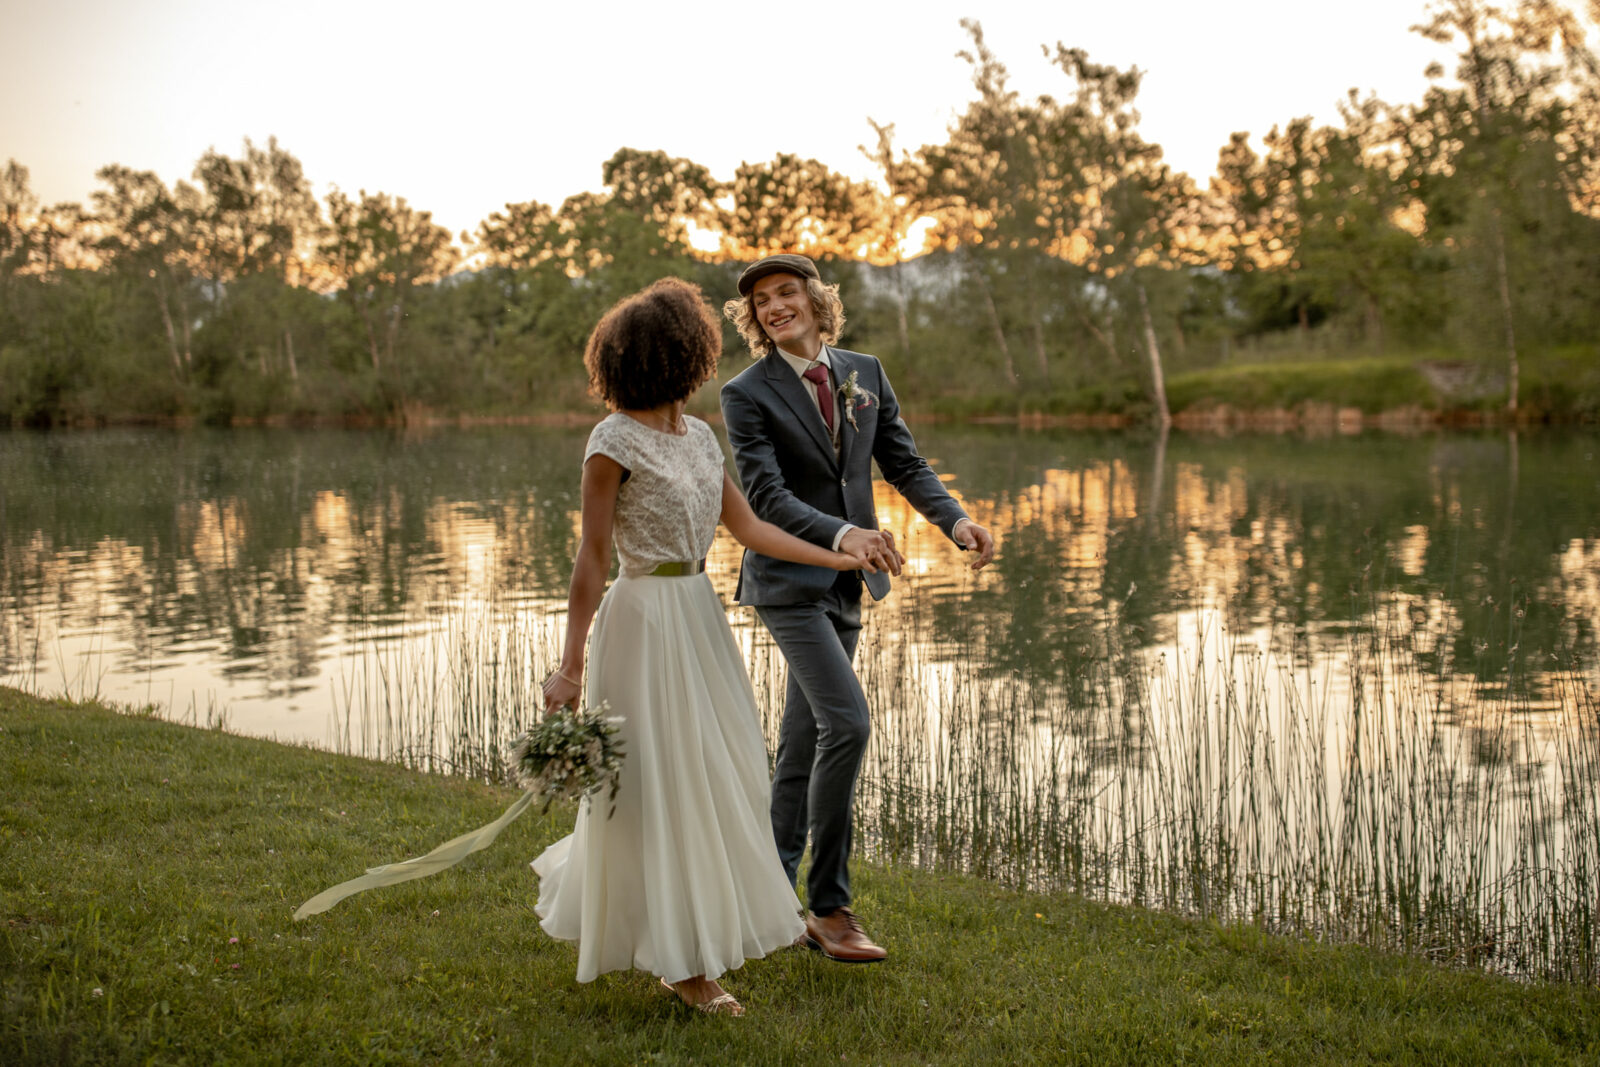 get married near switzerland outdoors